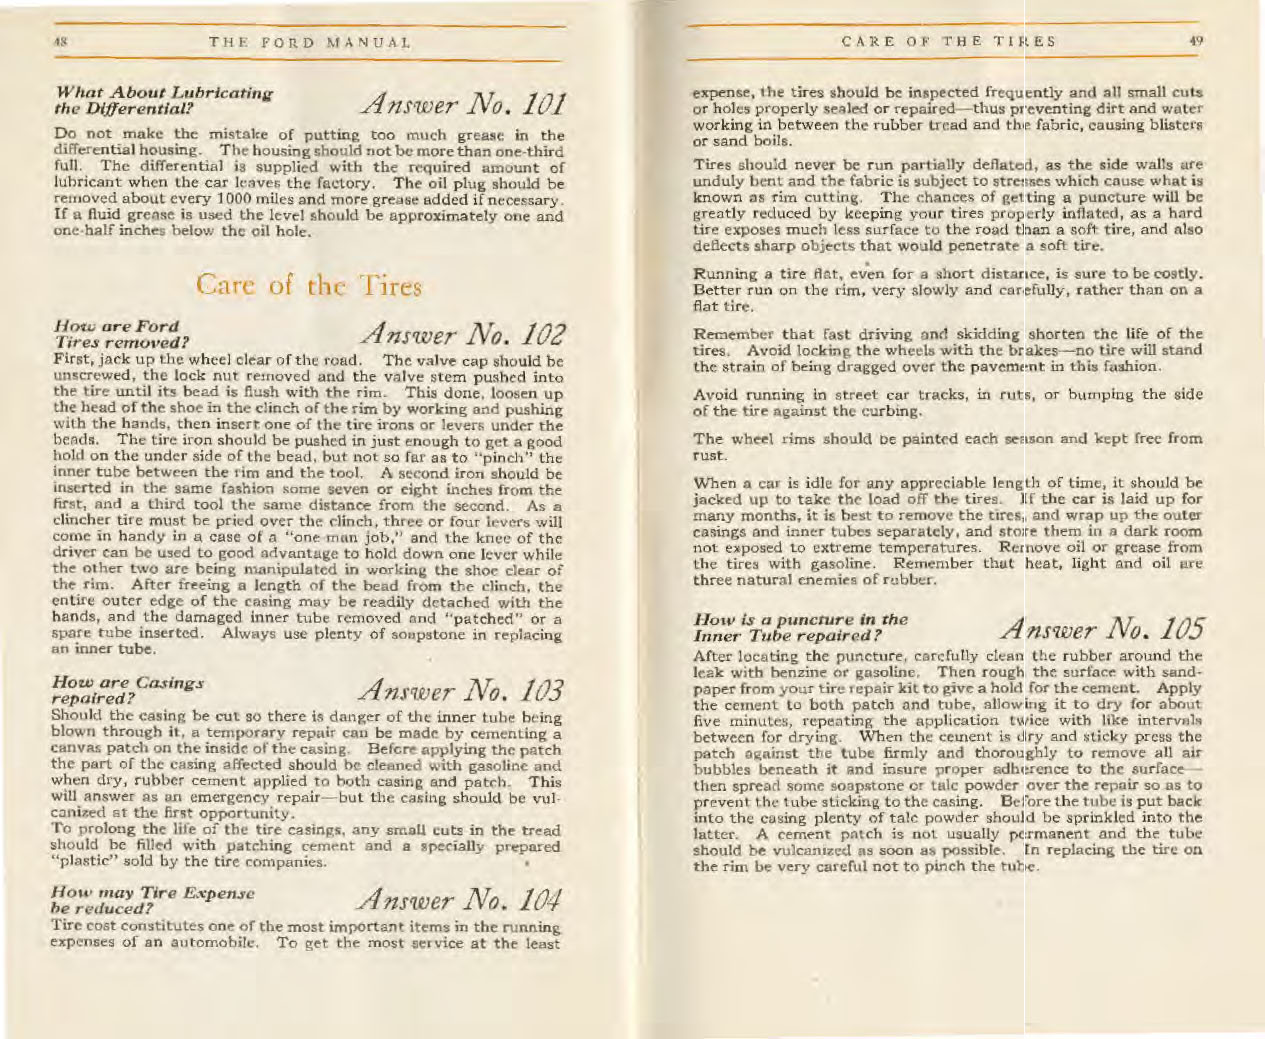 n_1919 Ford Manual-48-49.jpg